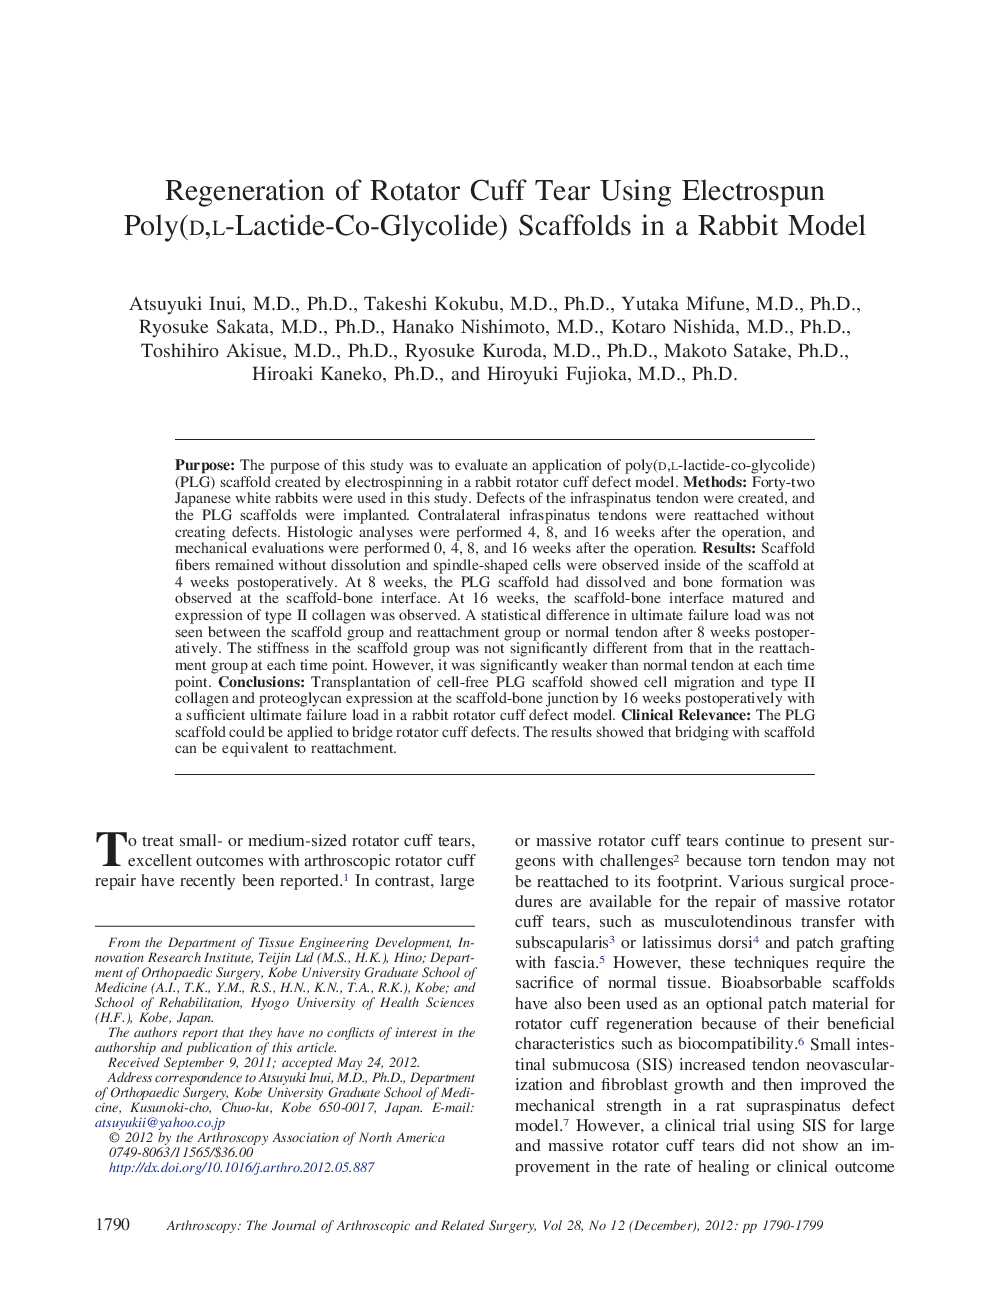 Regeneration of Rotator Cuff Tear Using Electrospun Poly(d,l-Lactide-Co-Glycolide) Scaffolds in a Rabbit Model 